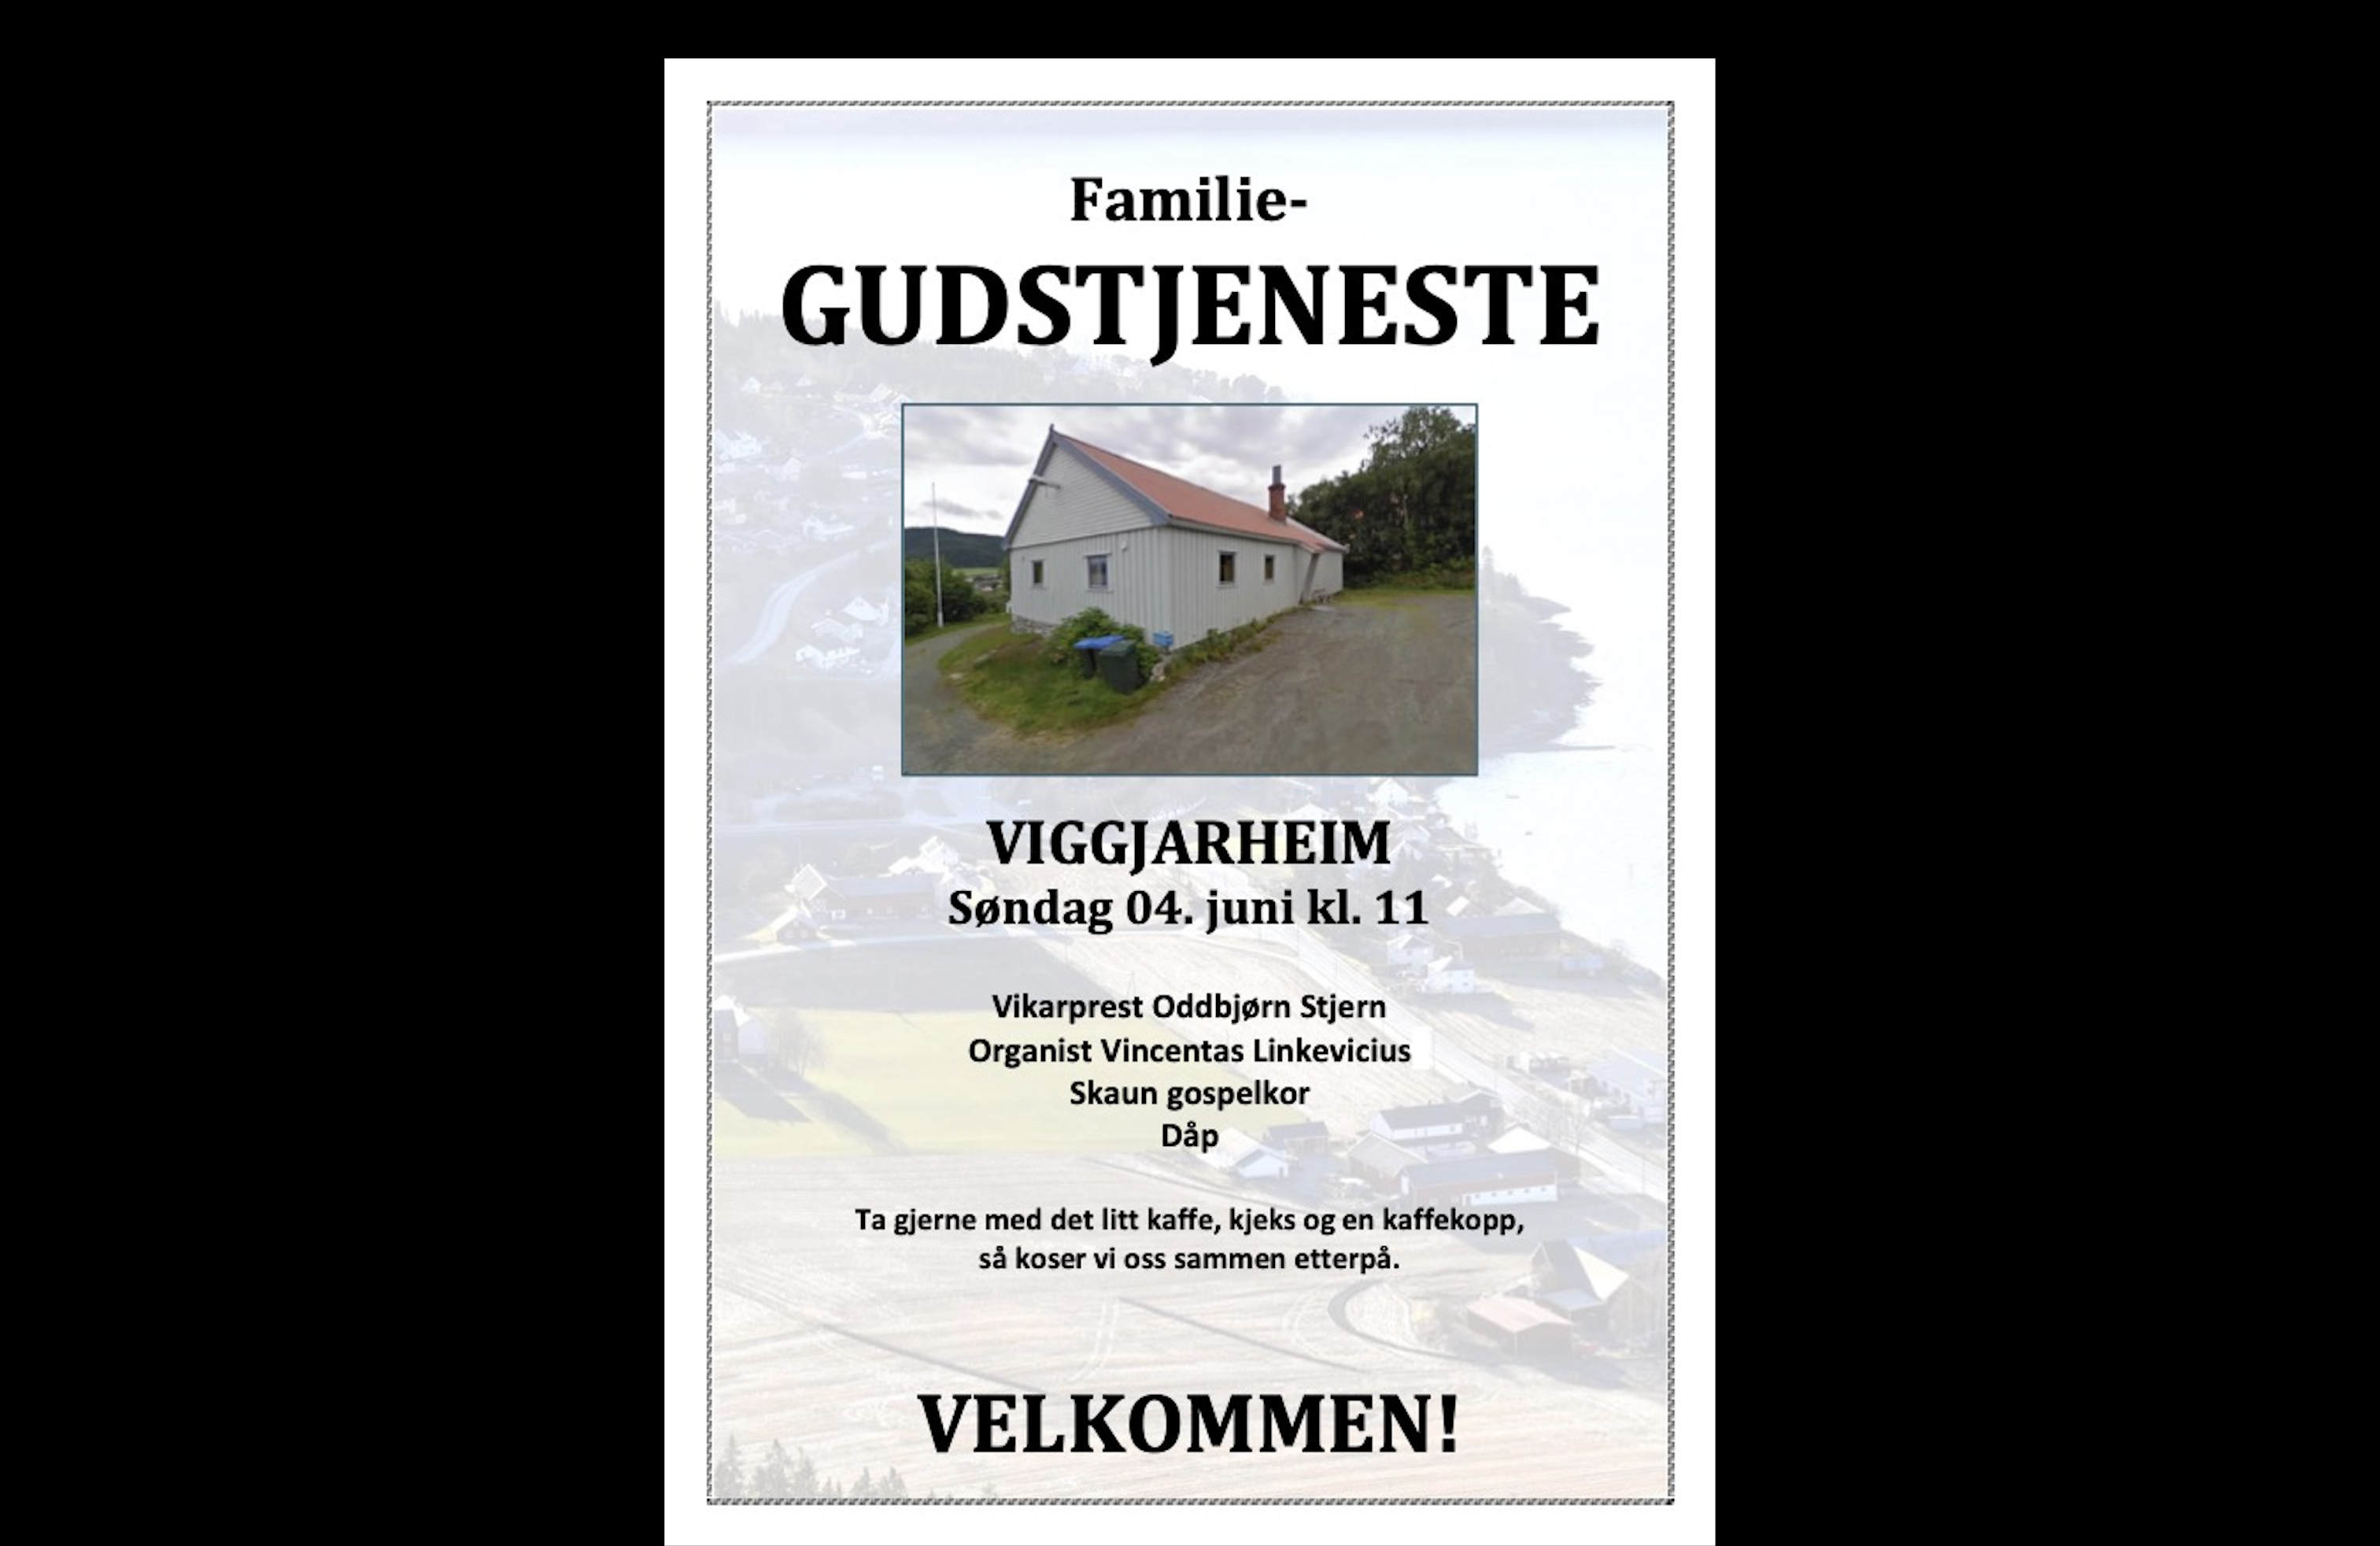 Familiegudstjeneste på Viggjarheim på søndag 04. juni kl.11